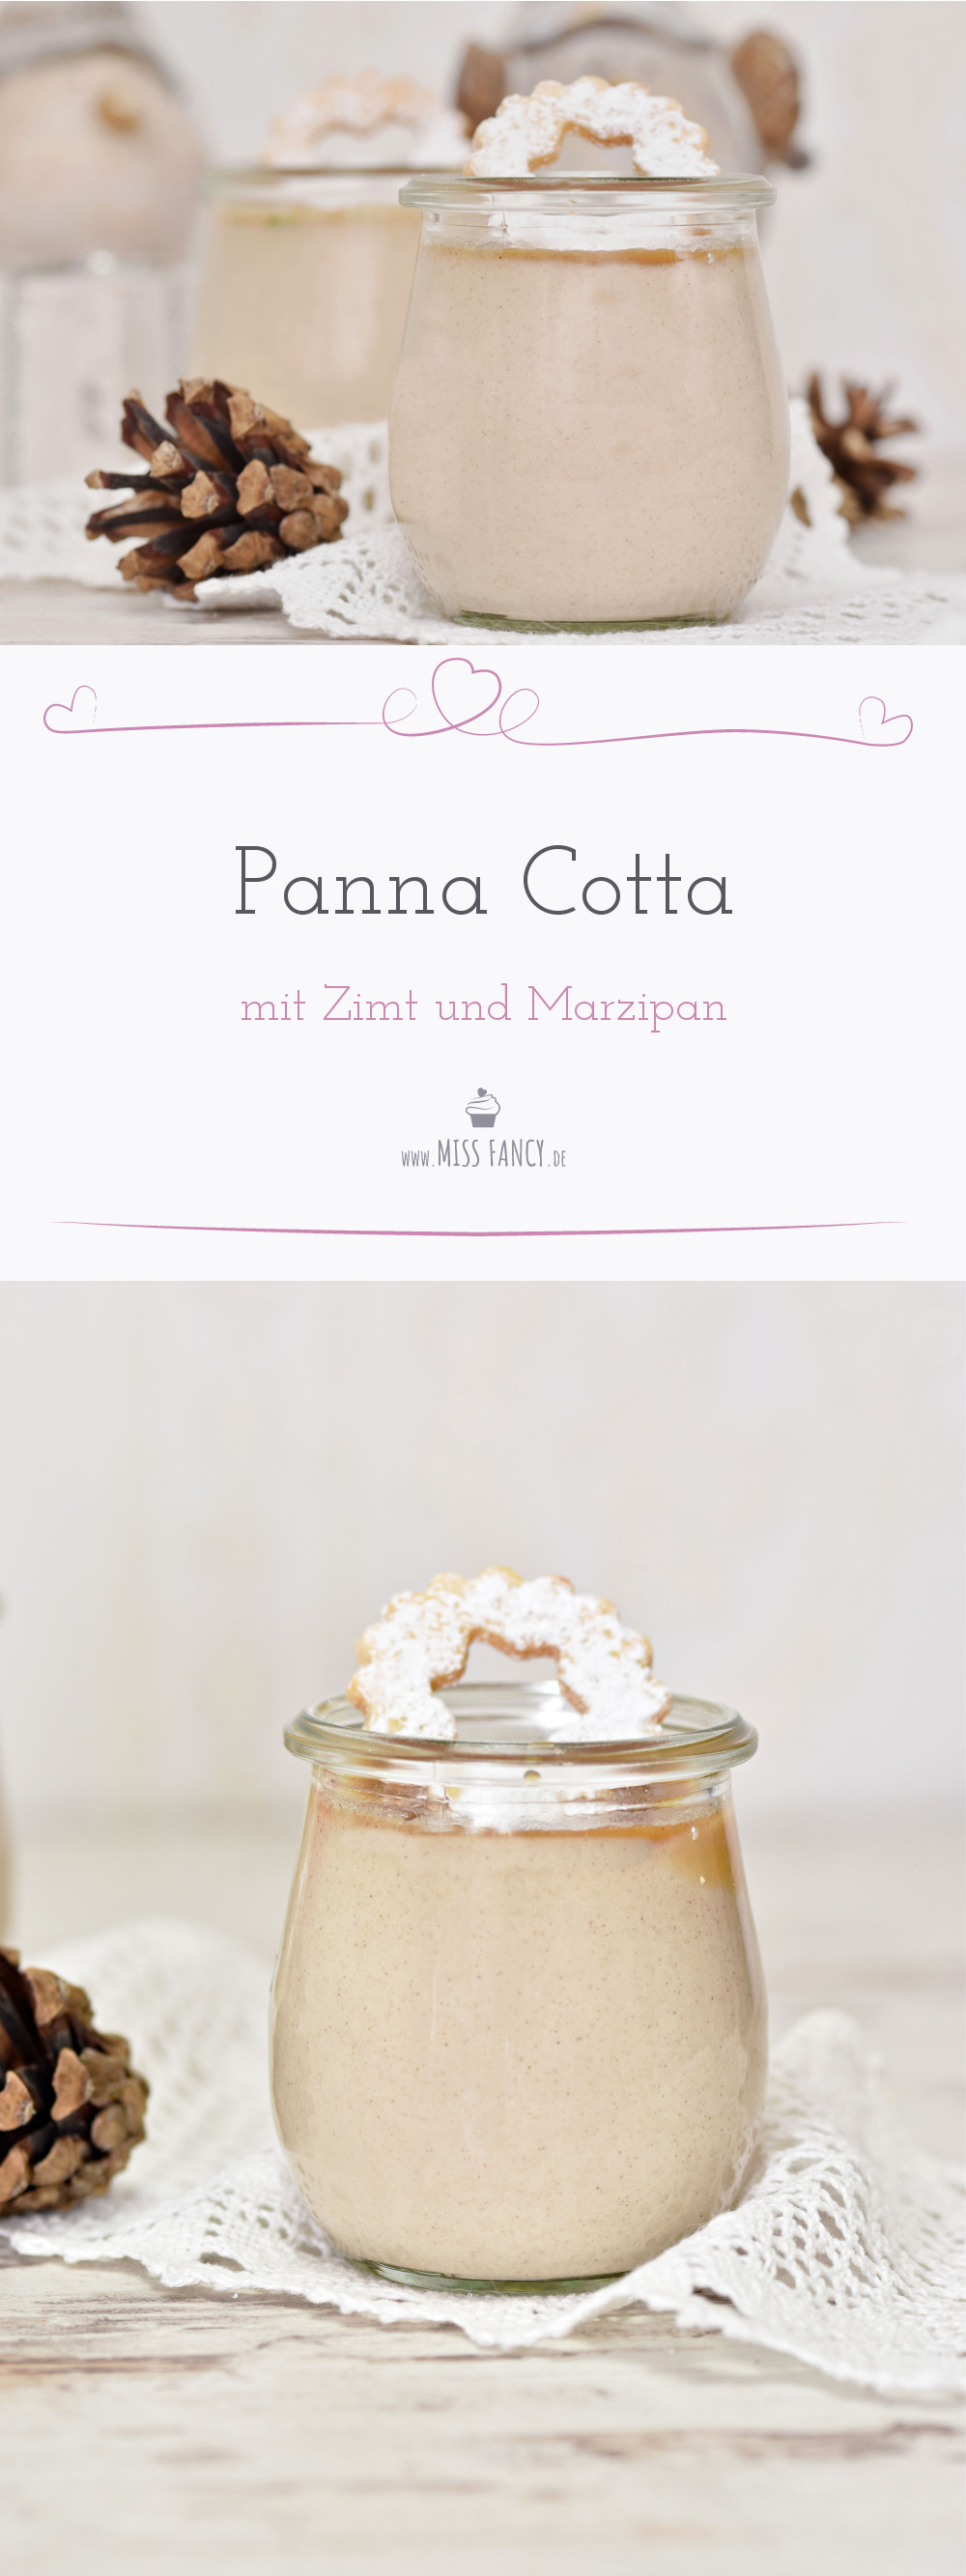 Rezept-Panna-Cotta-Zimt-Marzipan